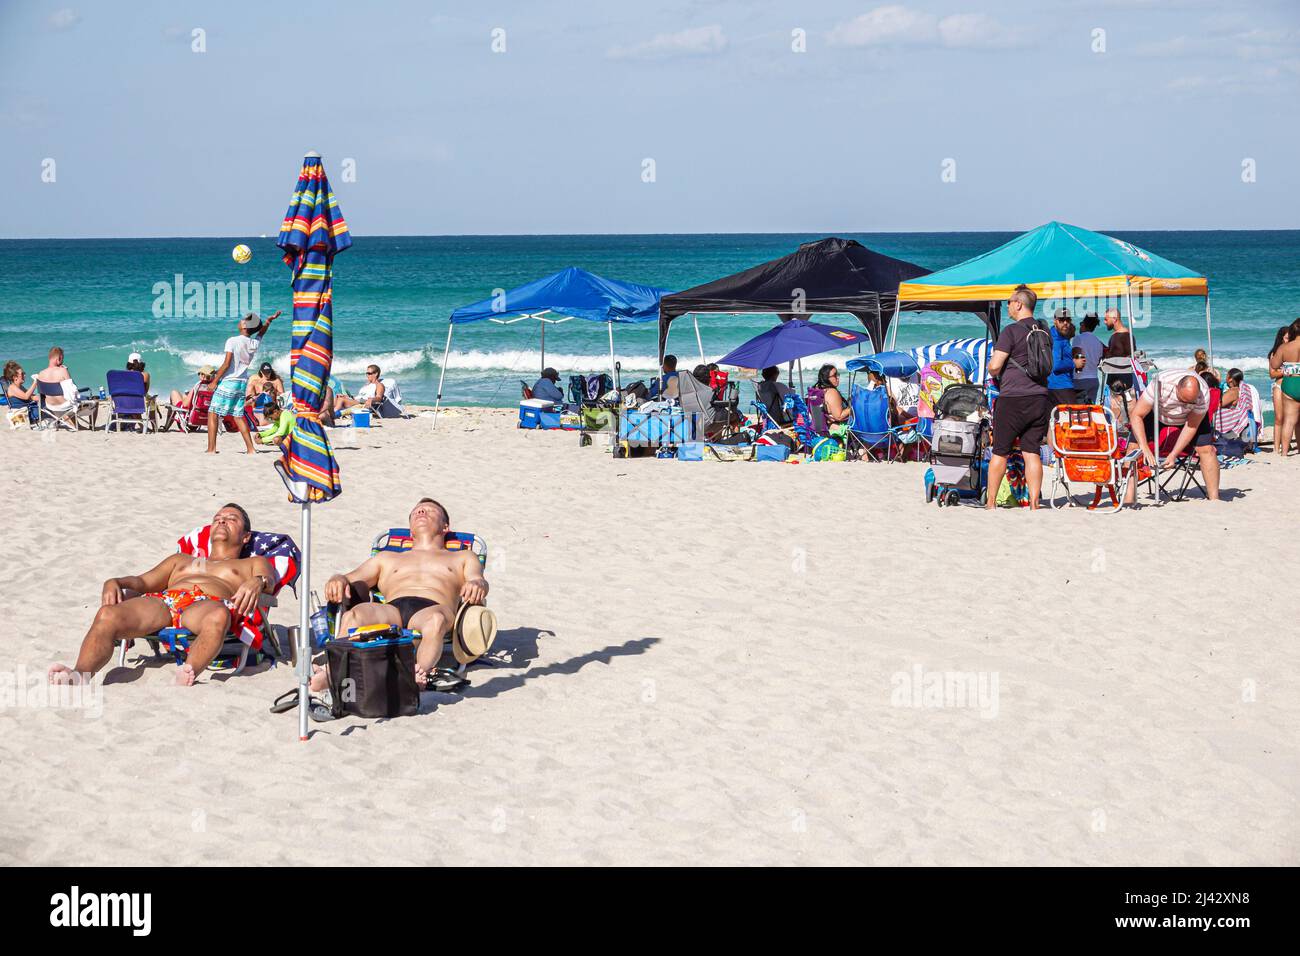 Miami Beach Florida public North Beach bains de soleil gens de l'océan Atlantique familles hispaniques Banque D'Images